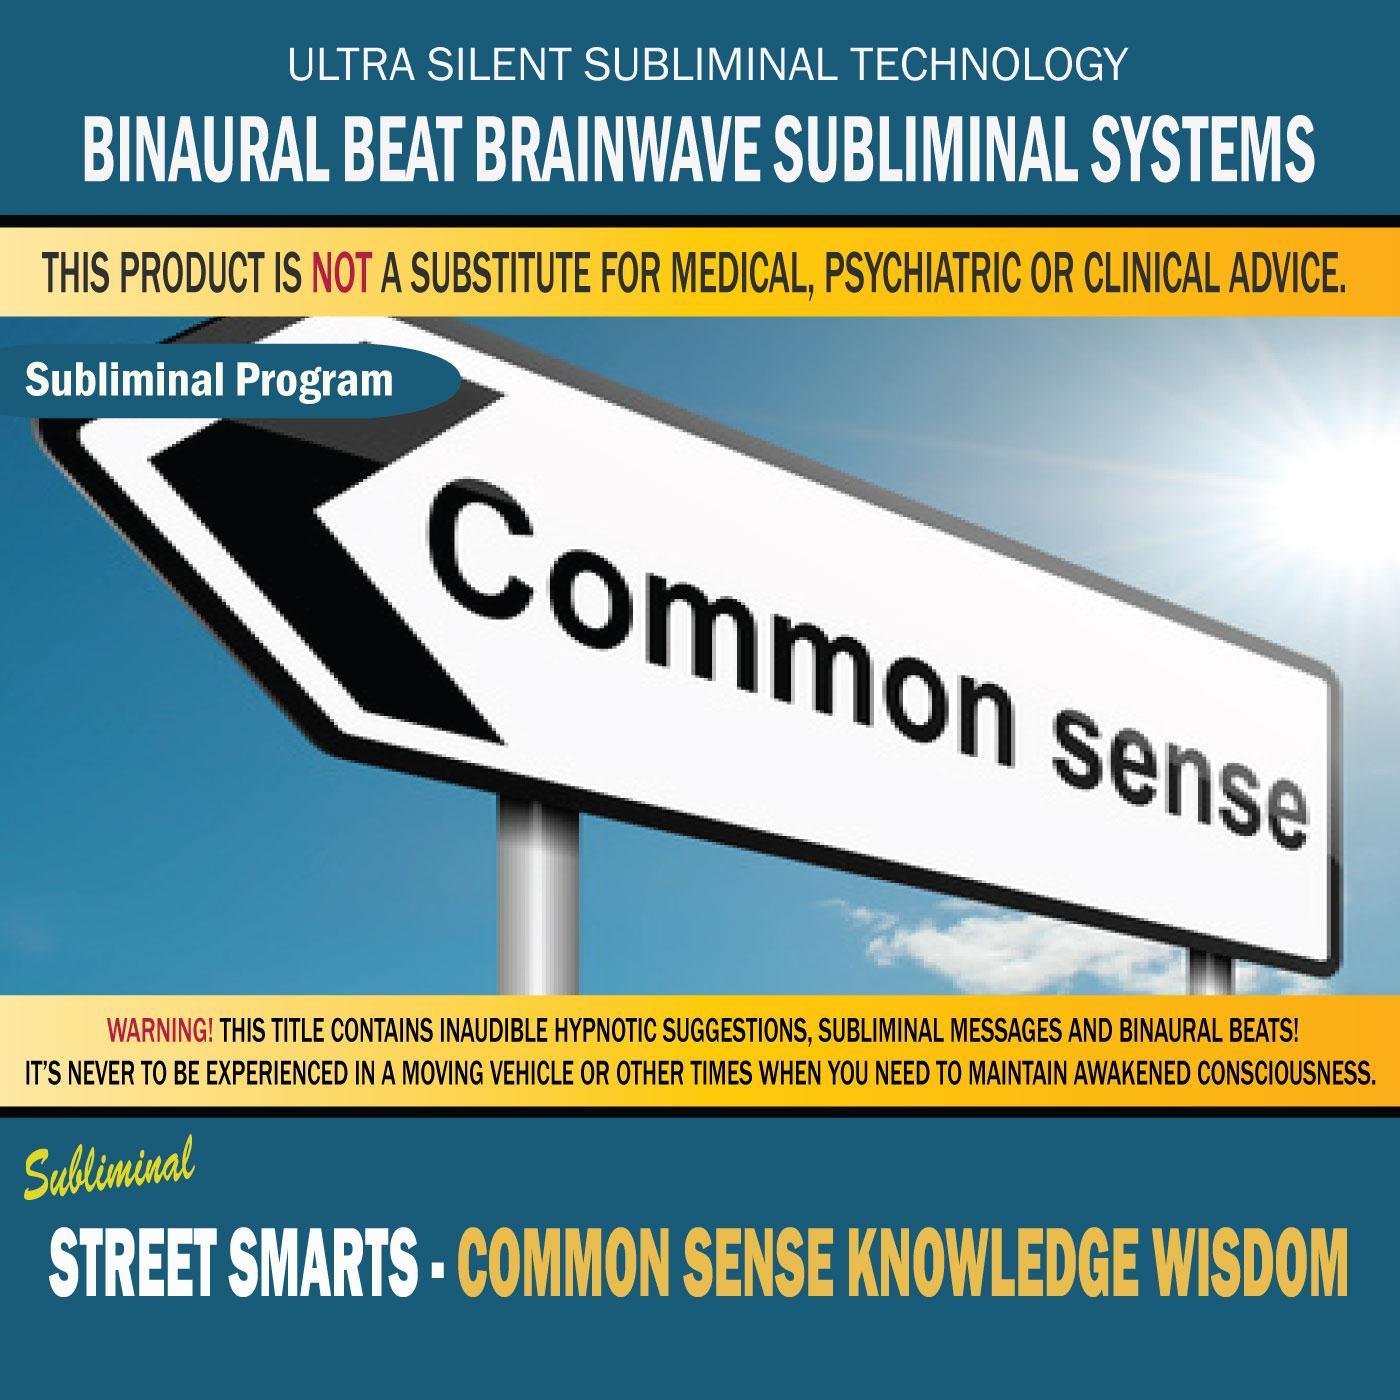 Street Smarts - Common Sense Knowledge Wisdom